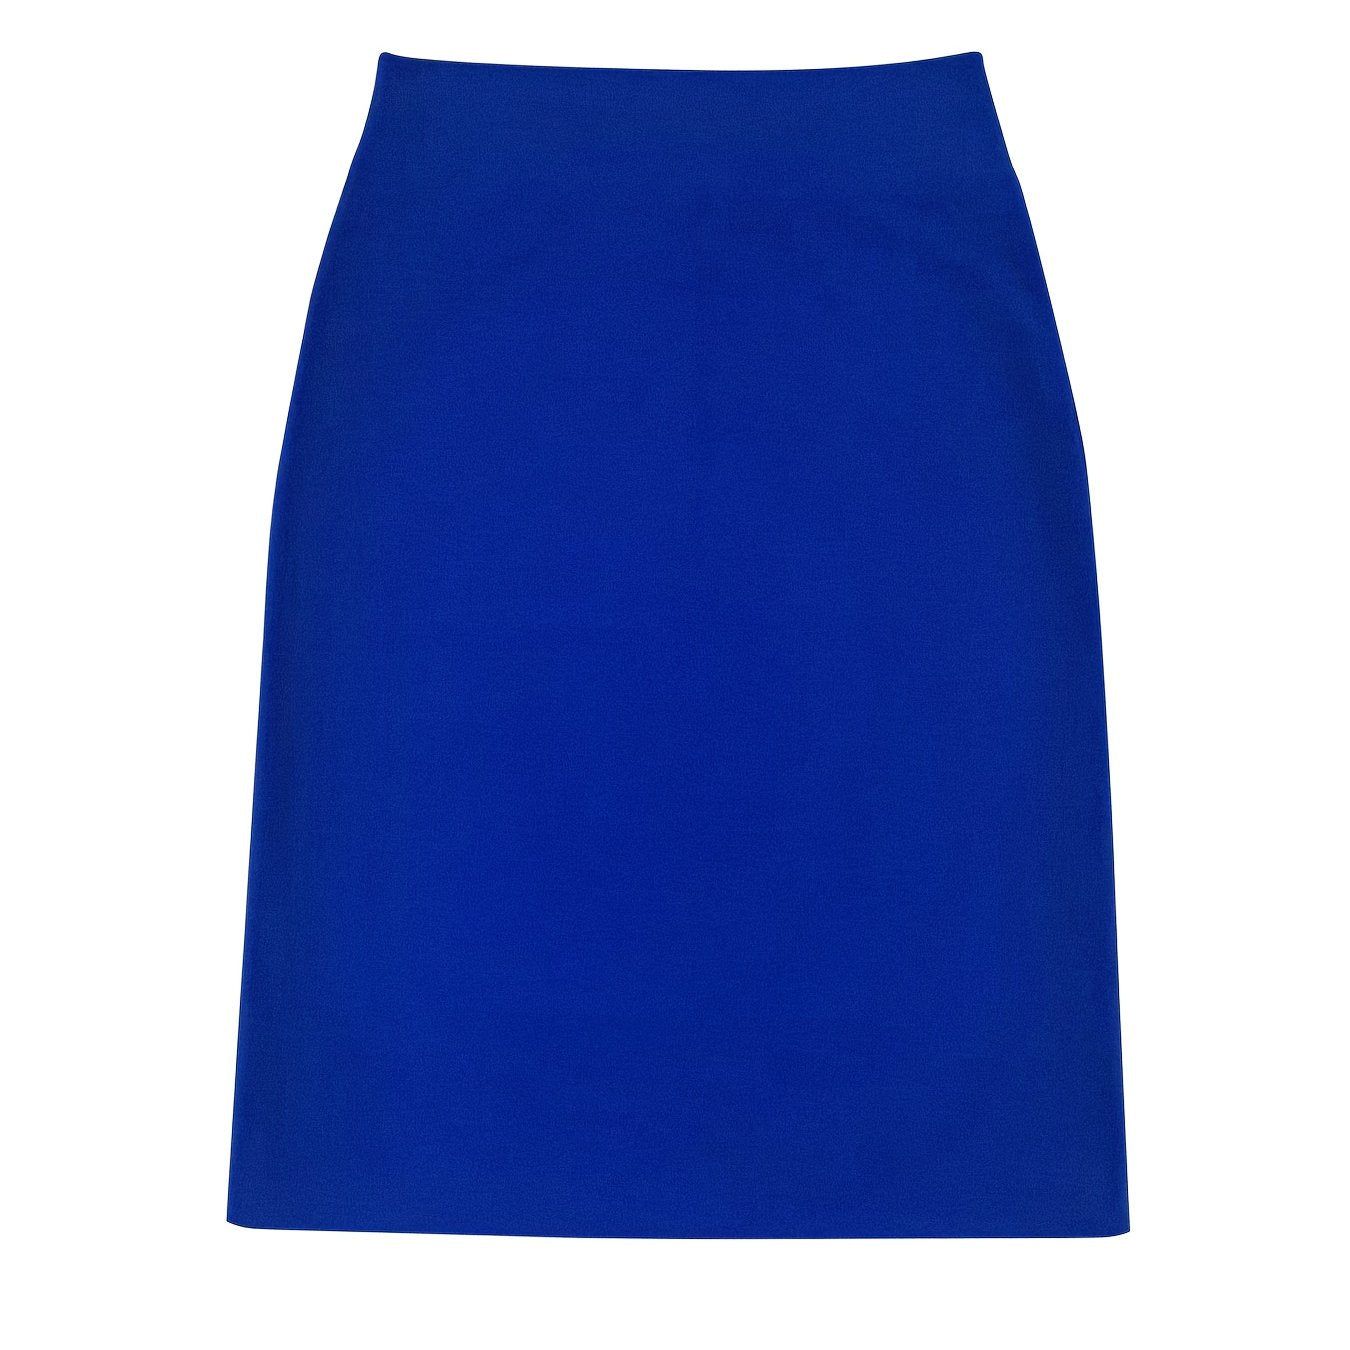 vlovelaw Tall High Waist Pencil Skirt, Casual Solid Slim Skirt For Spring & Summer, Women's Clothing